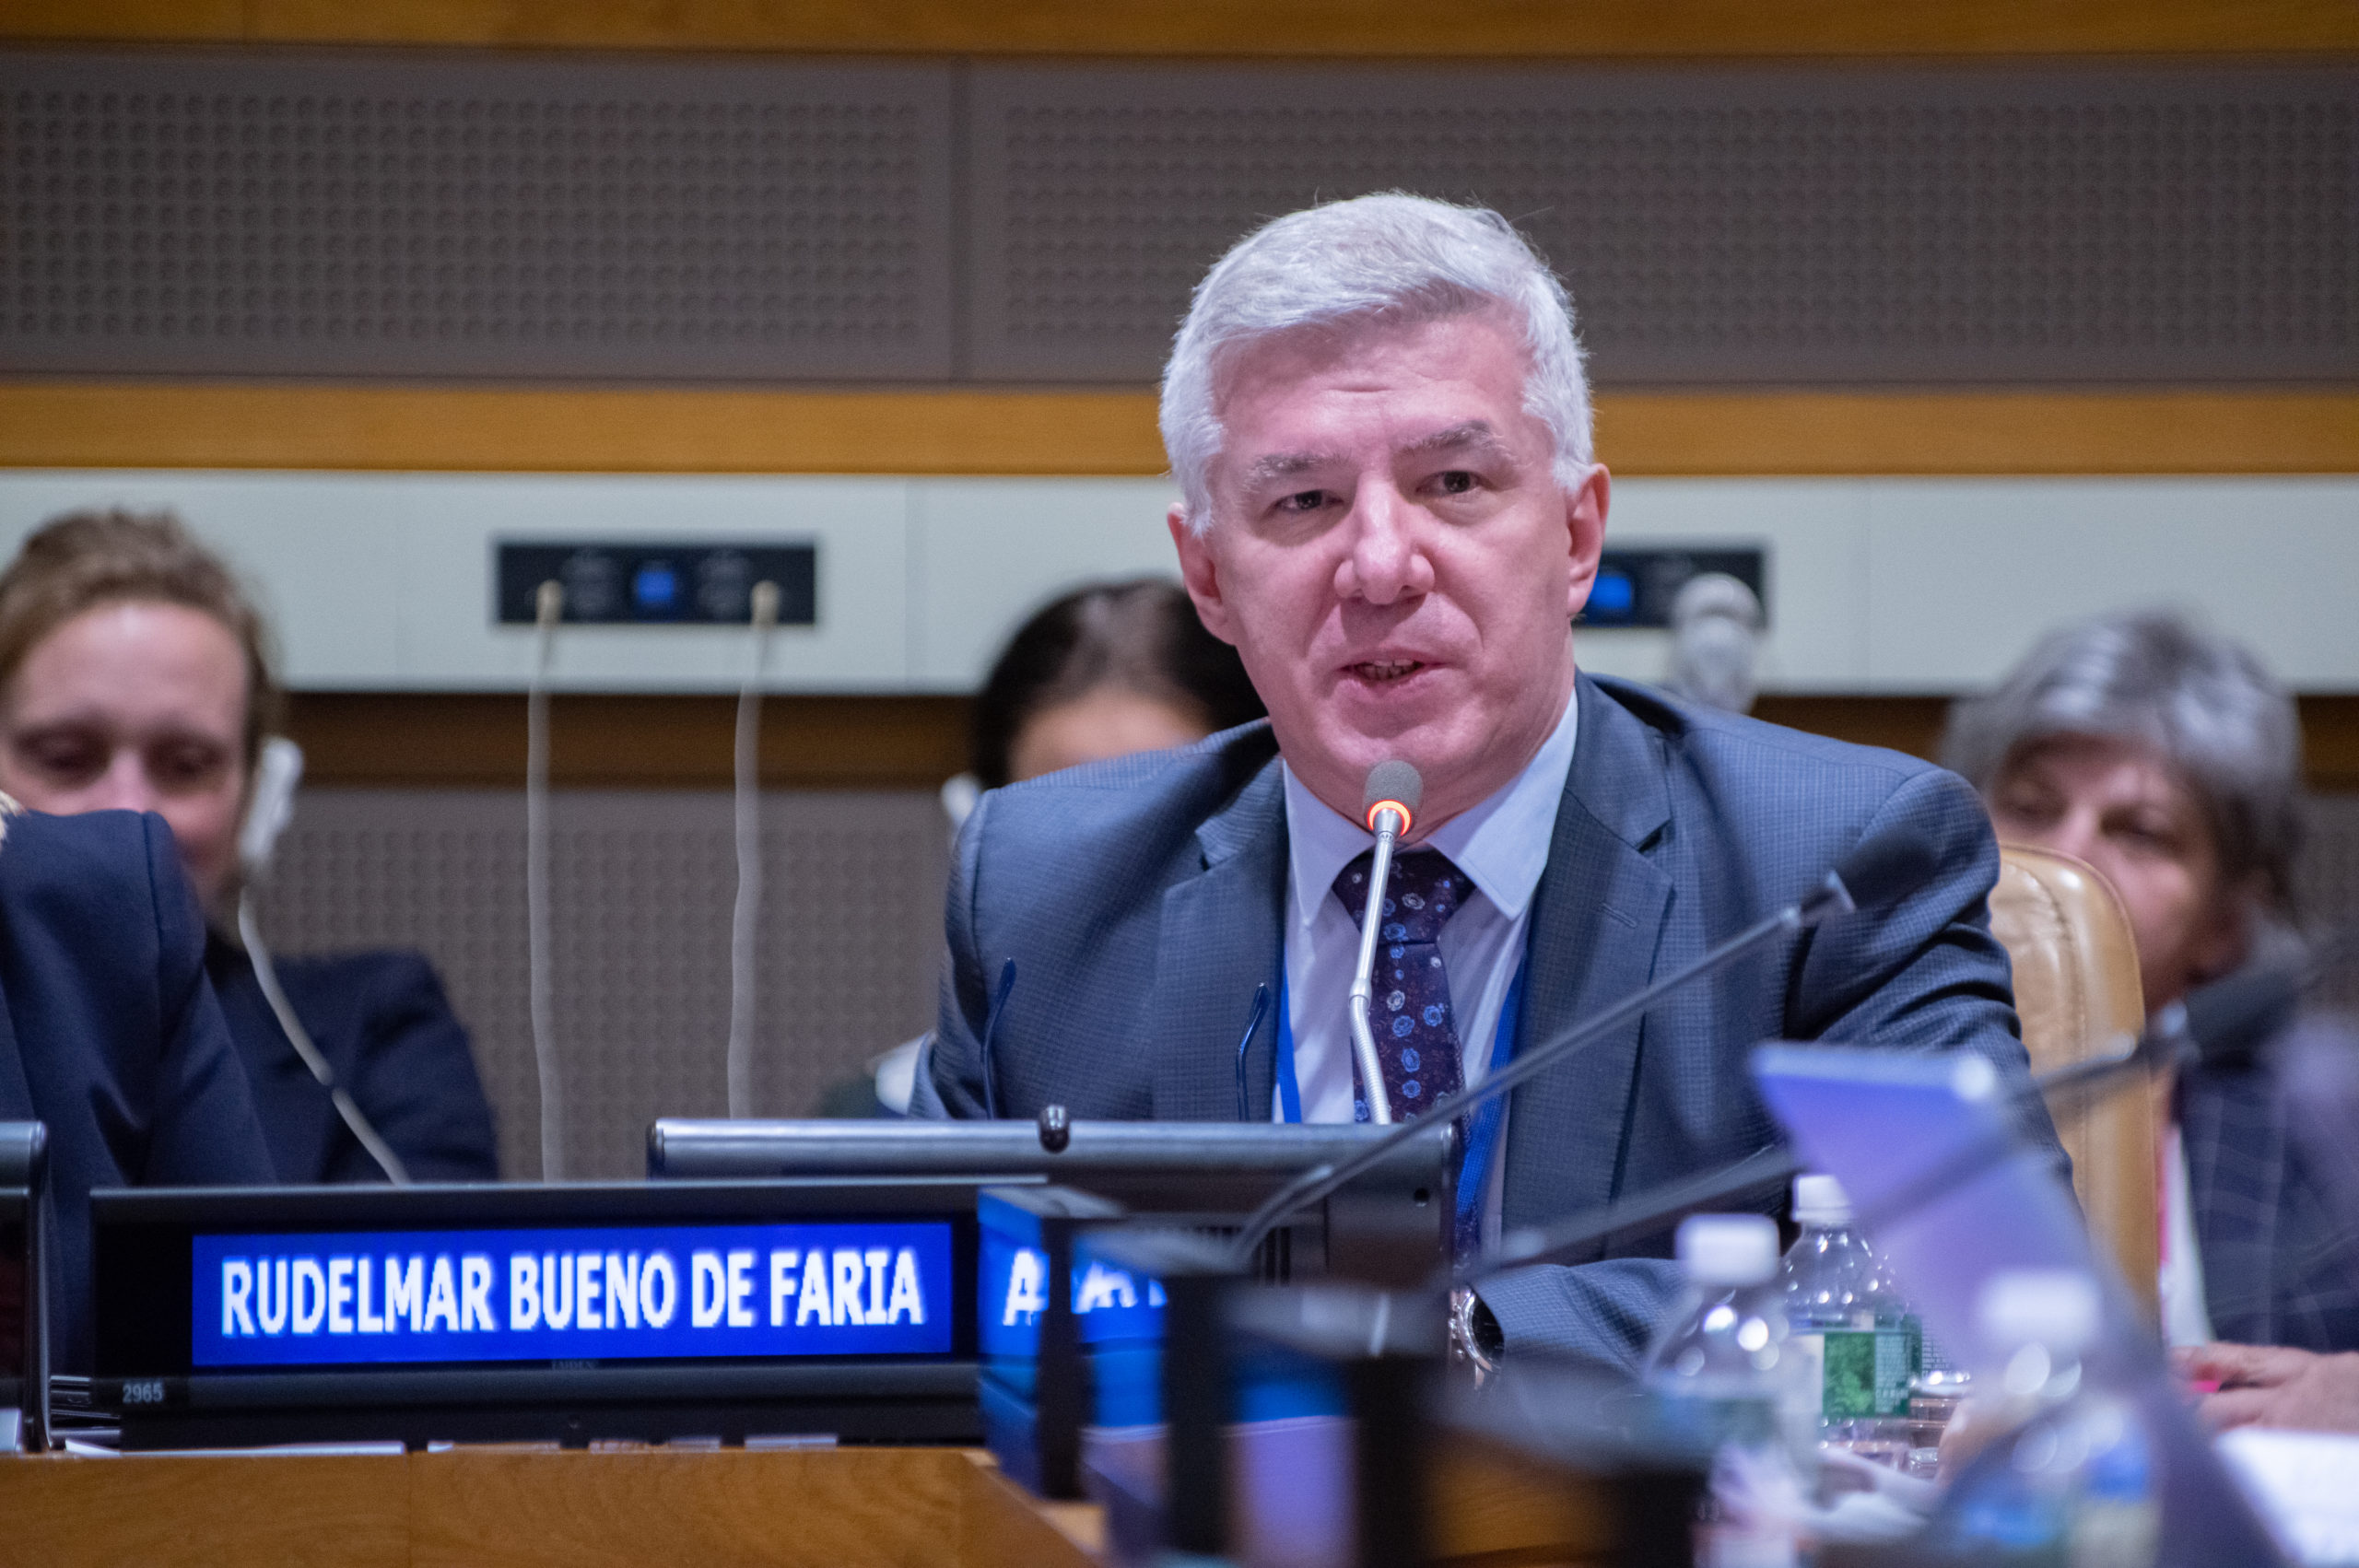 Rudelmar Bueno de Faria speaking at the United Nations. Photo: Simon Chambers/ACT